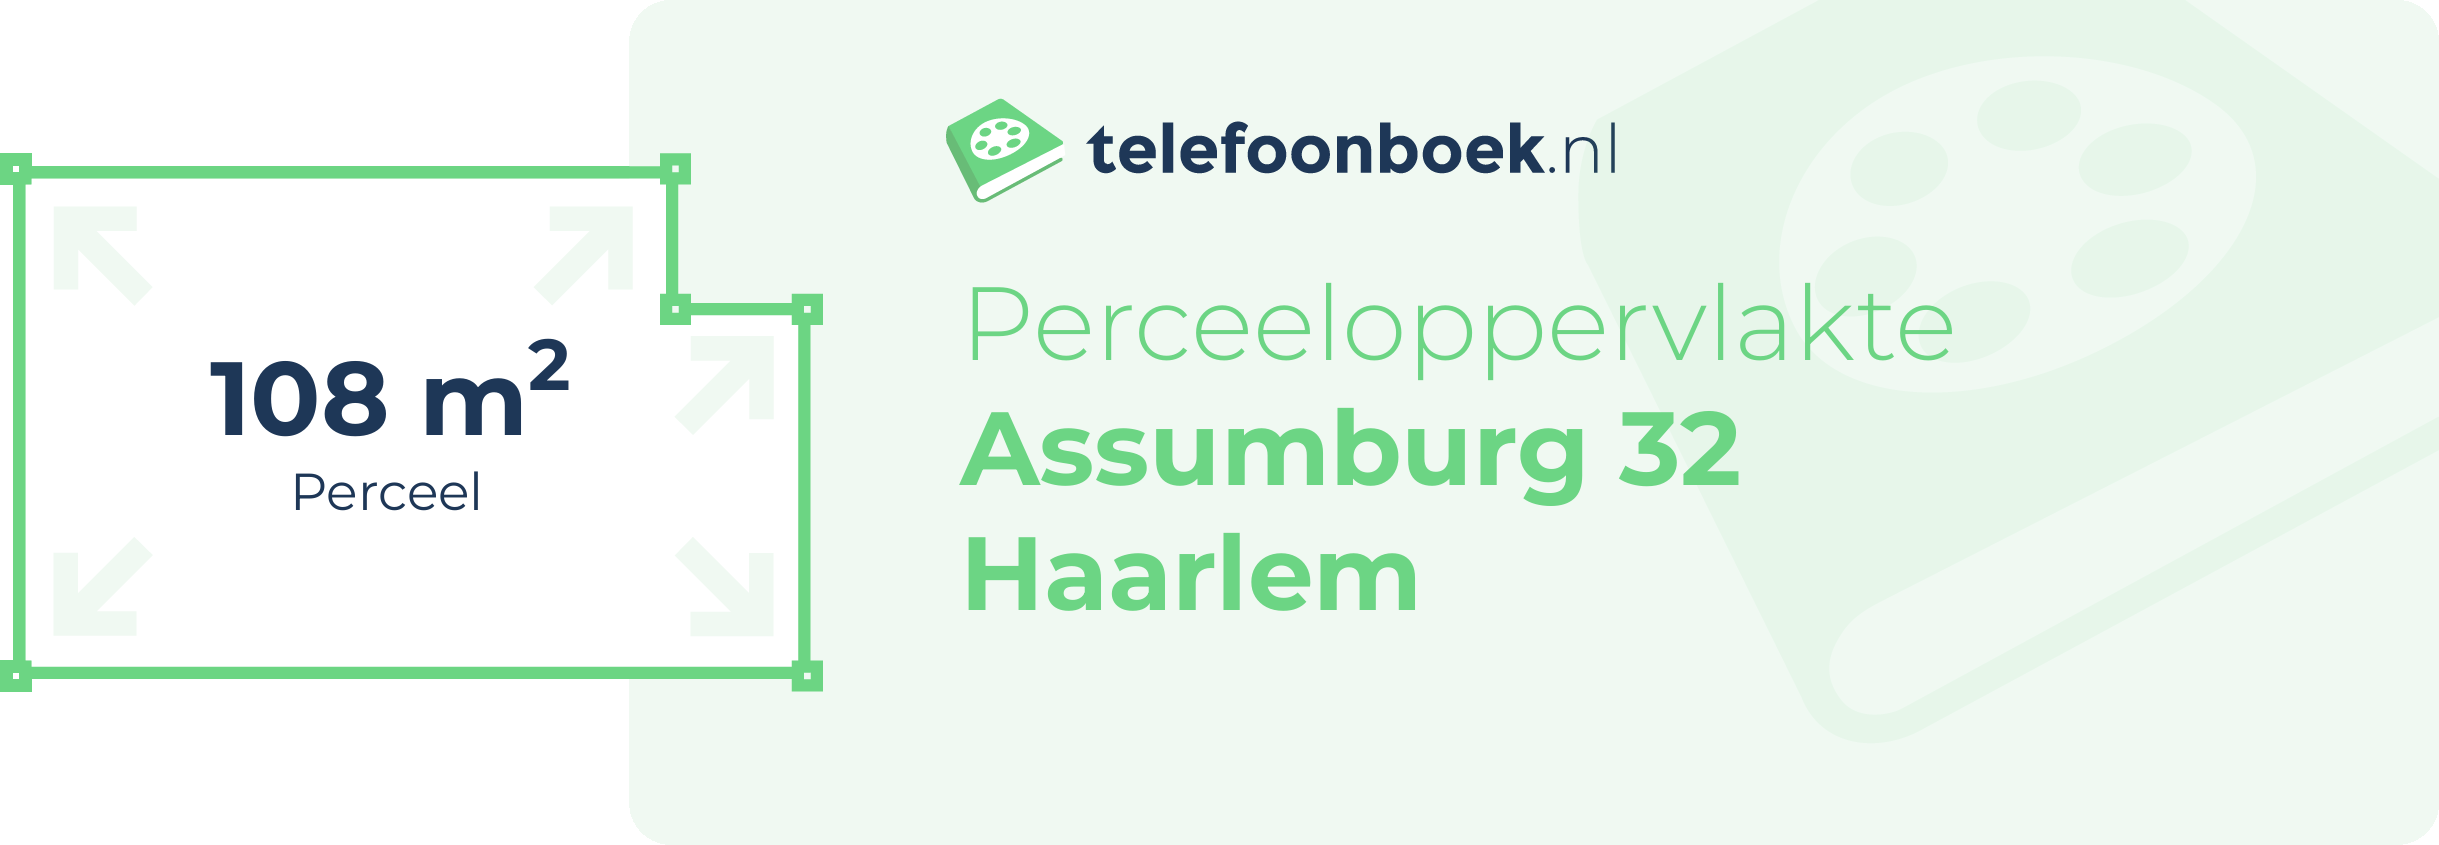 Perceeloppervlakte Assumburg 32 Haarlem